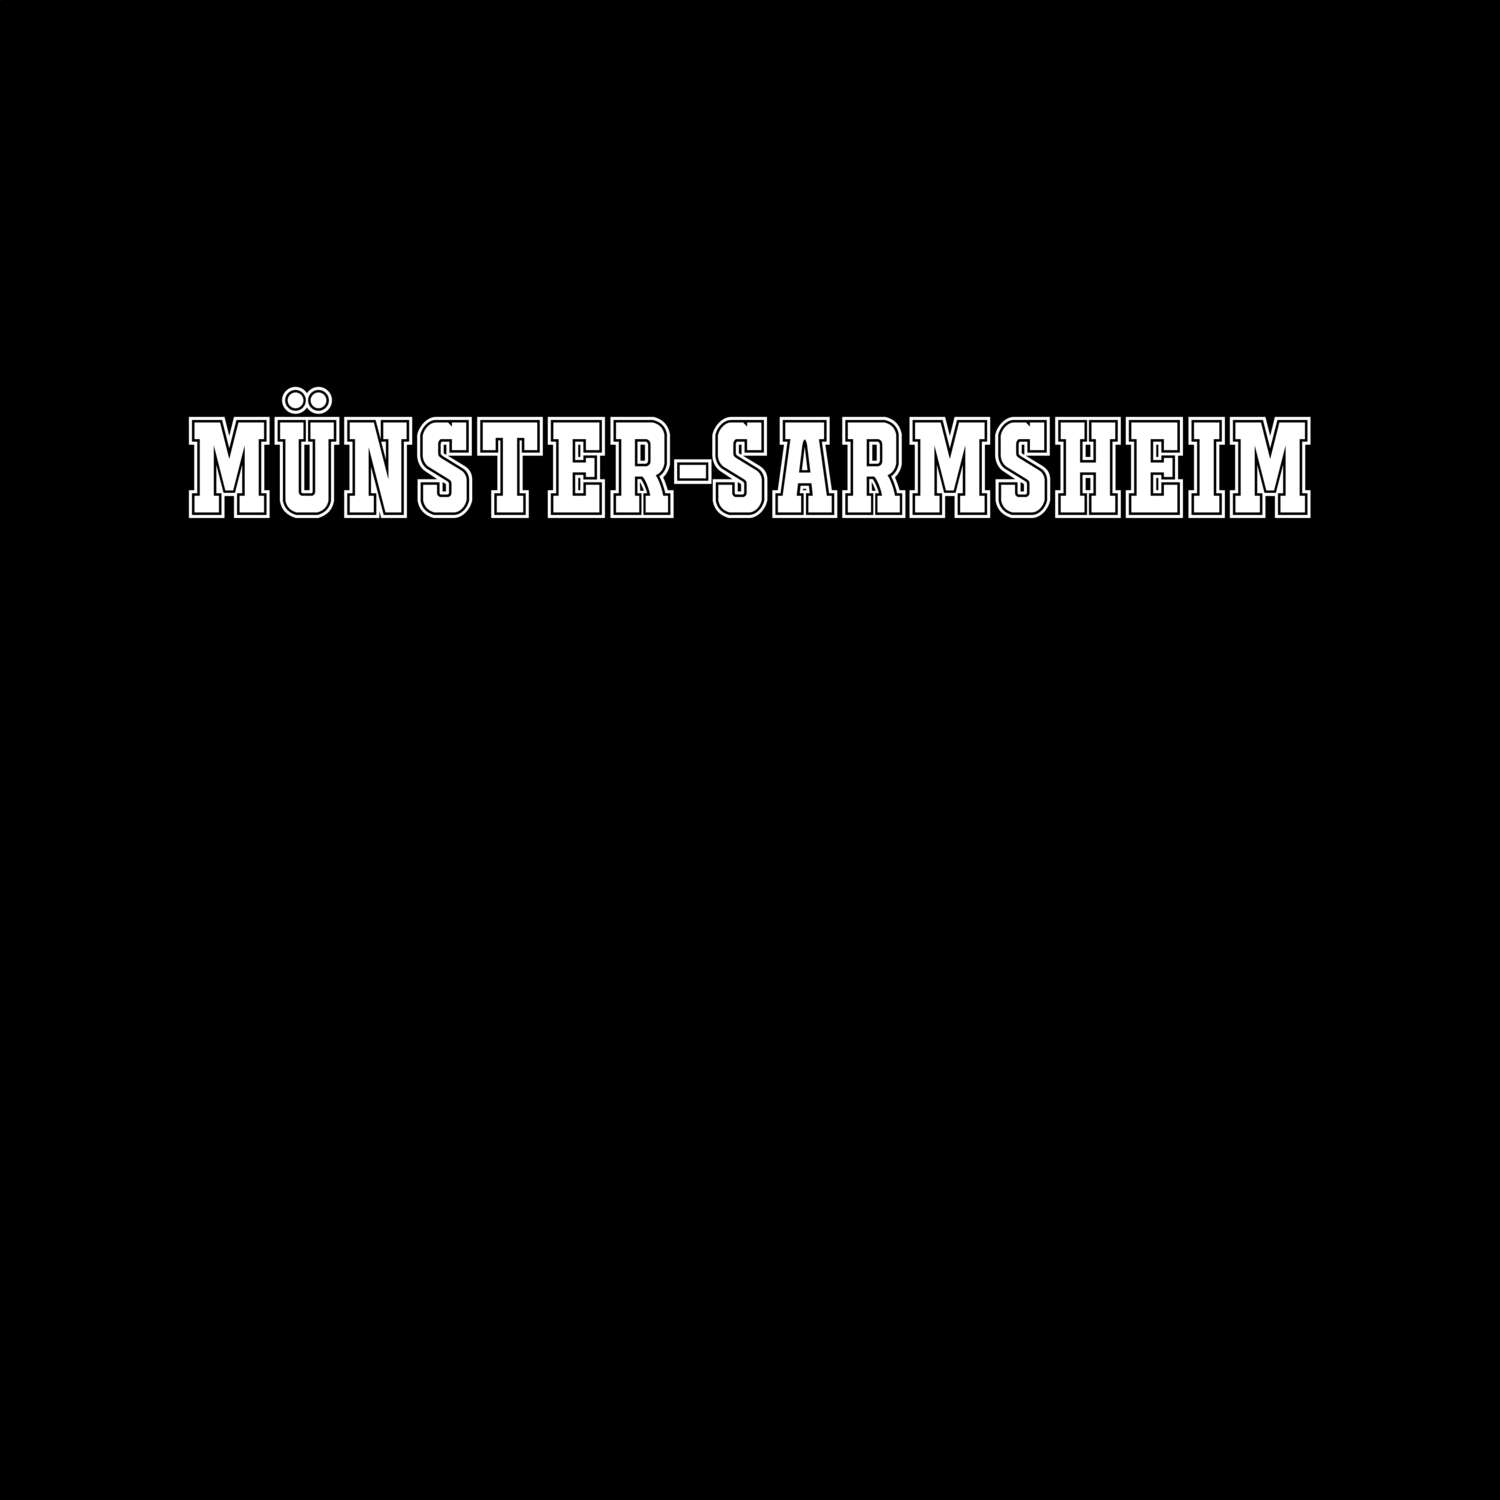 Münster-Sarmsheim T-Shirt »Classic«